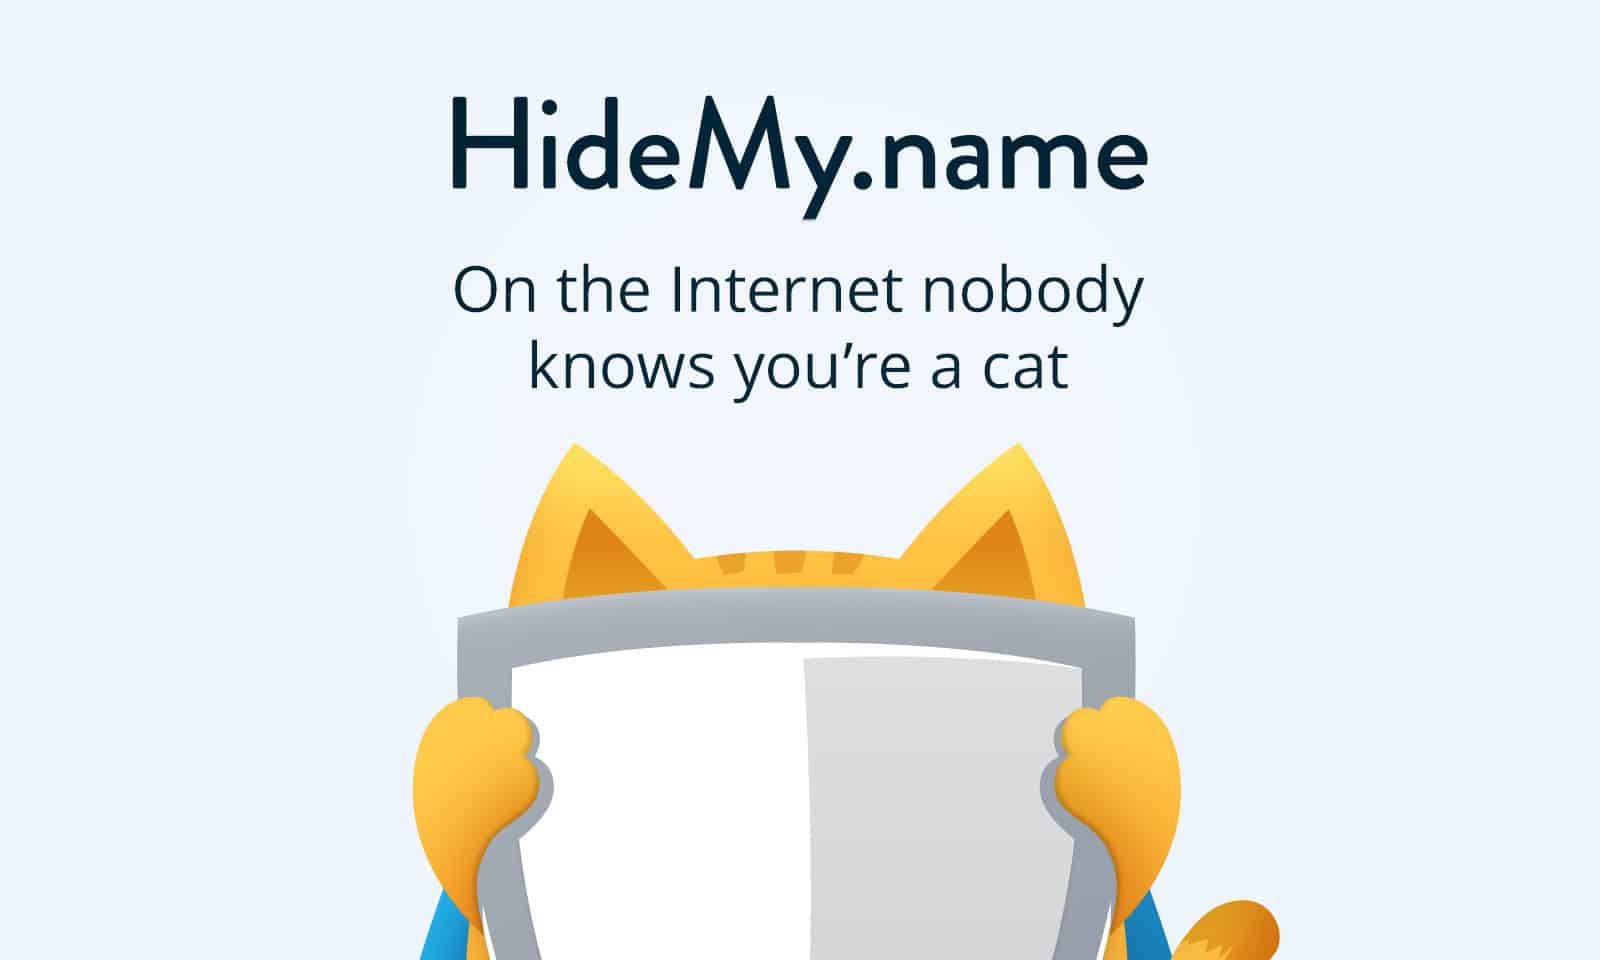 HideMy.name VPN can hide your deepest, darkest secrets.